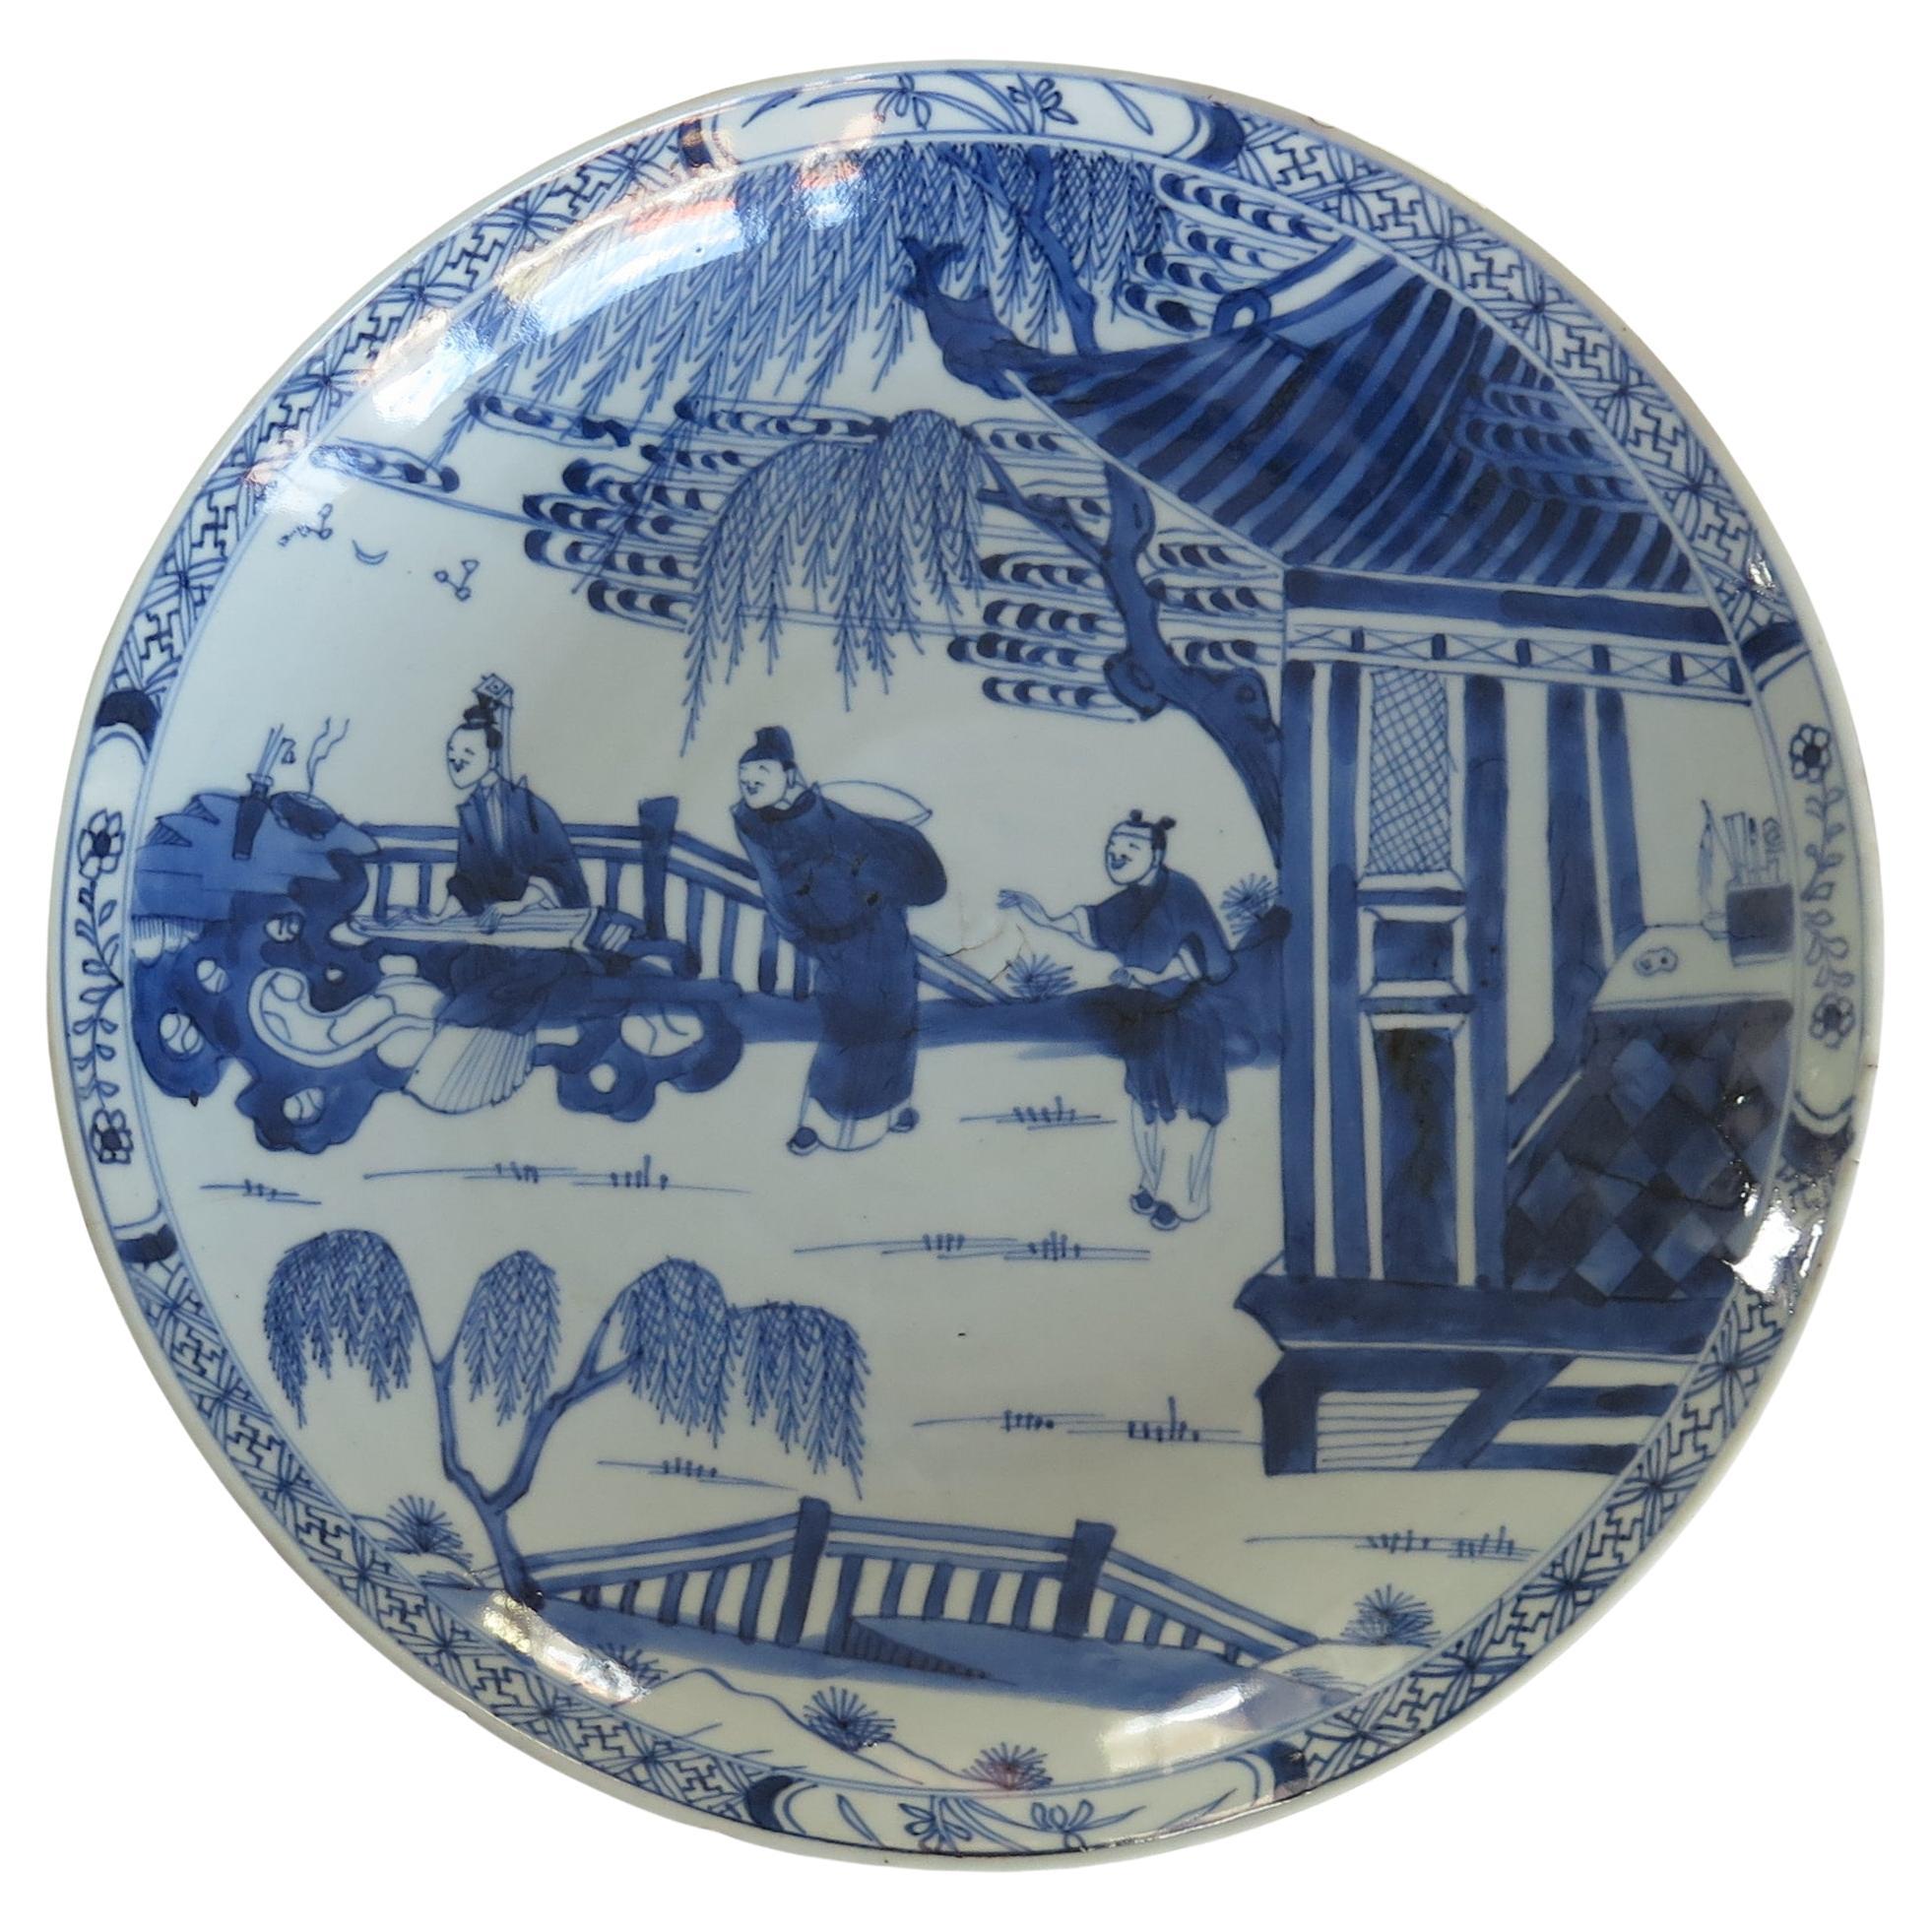 Kangxi Marked Large Chinese Dish or Plate Porcelain Blue & White, Circa 1690